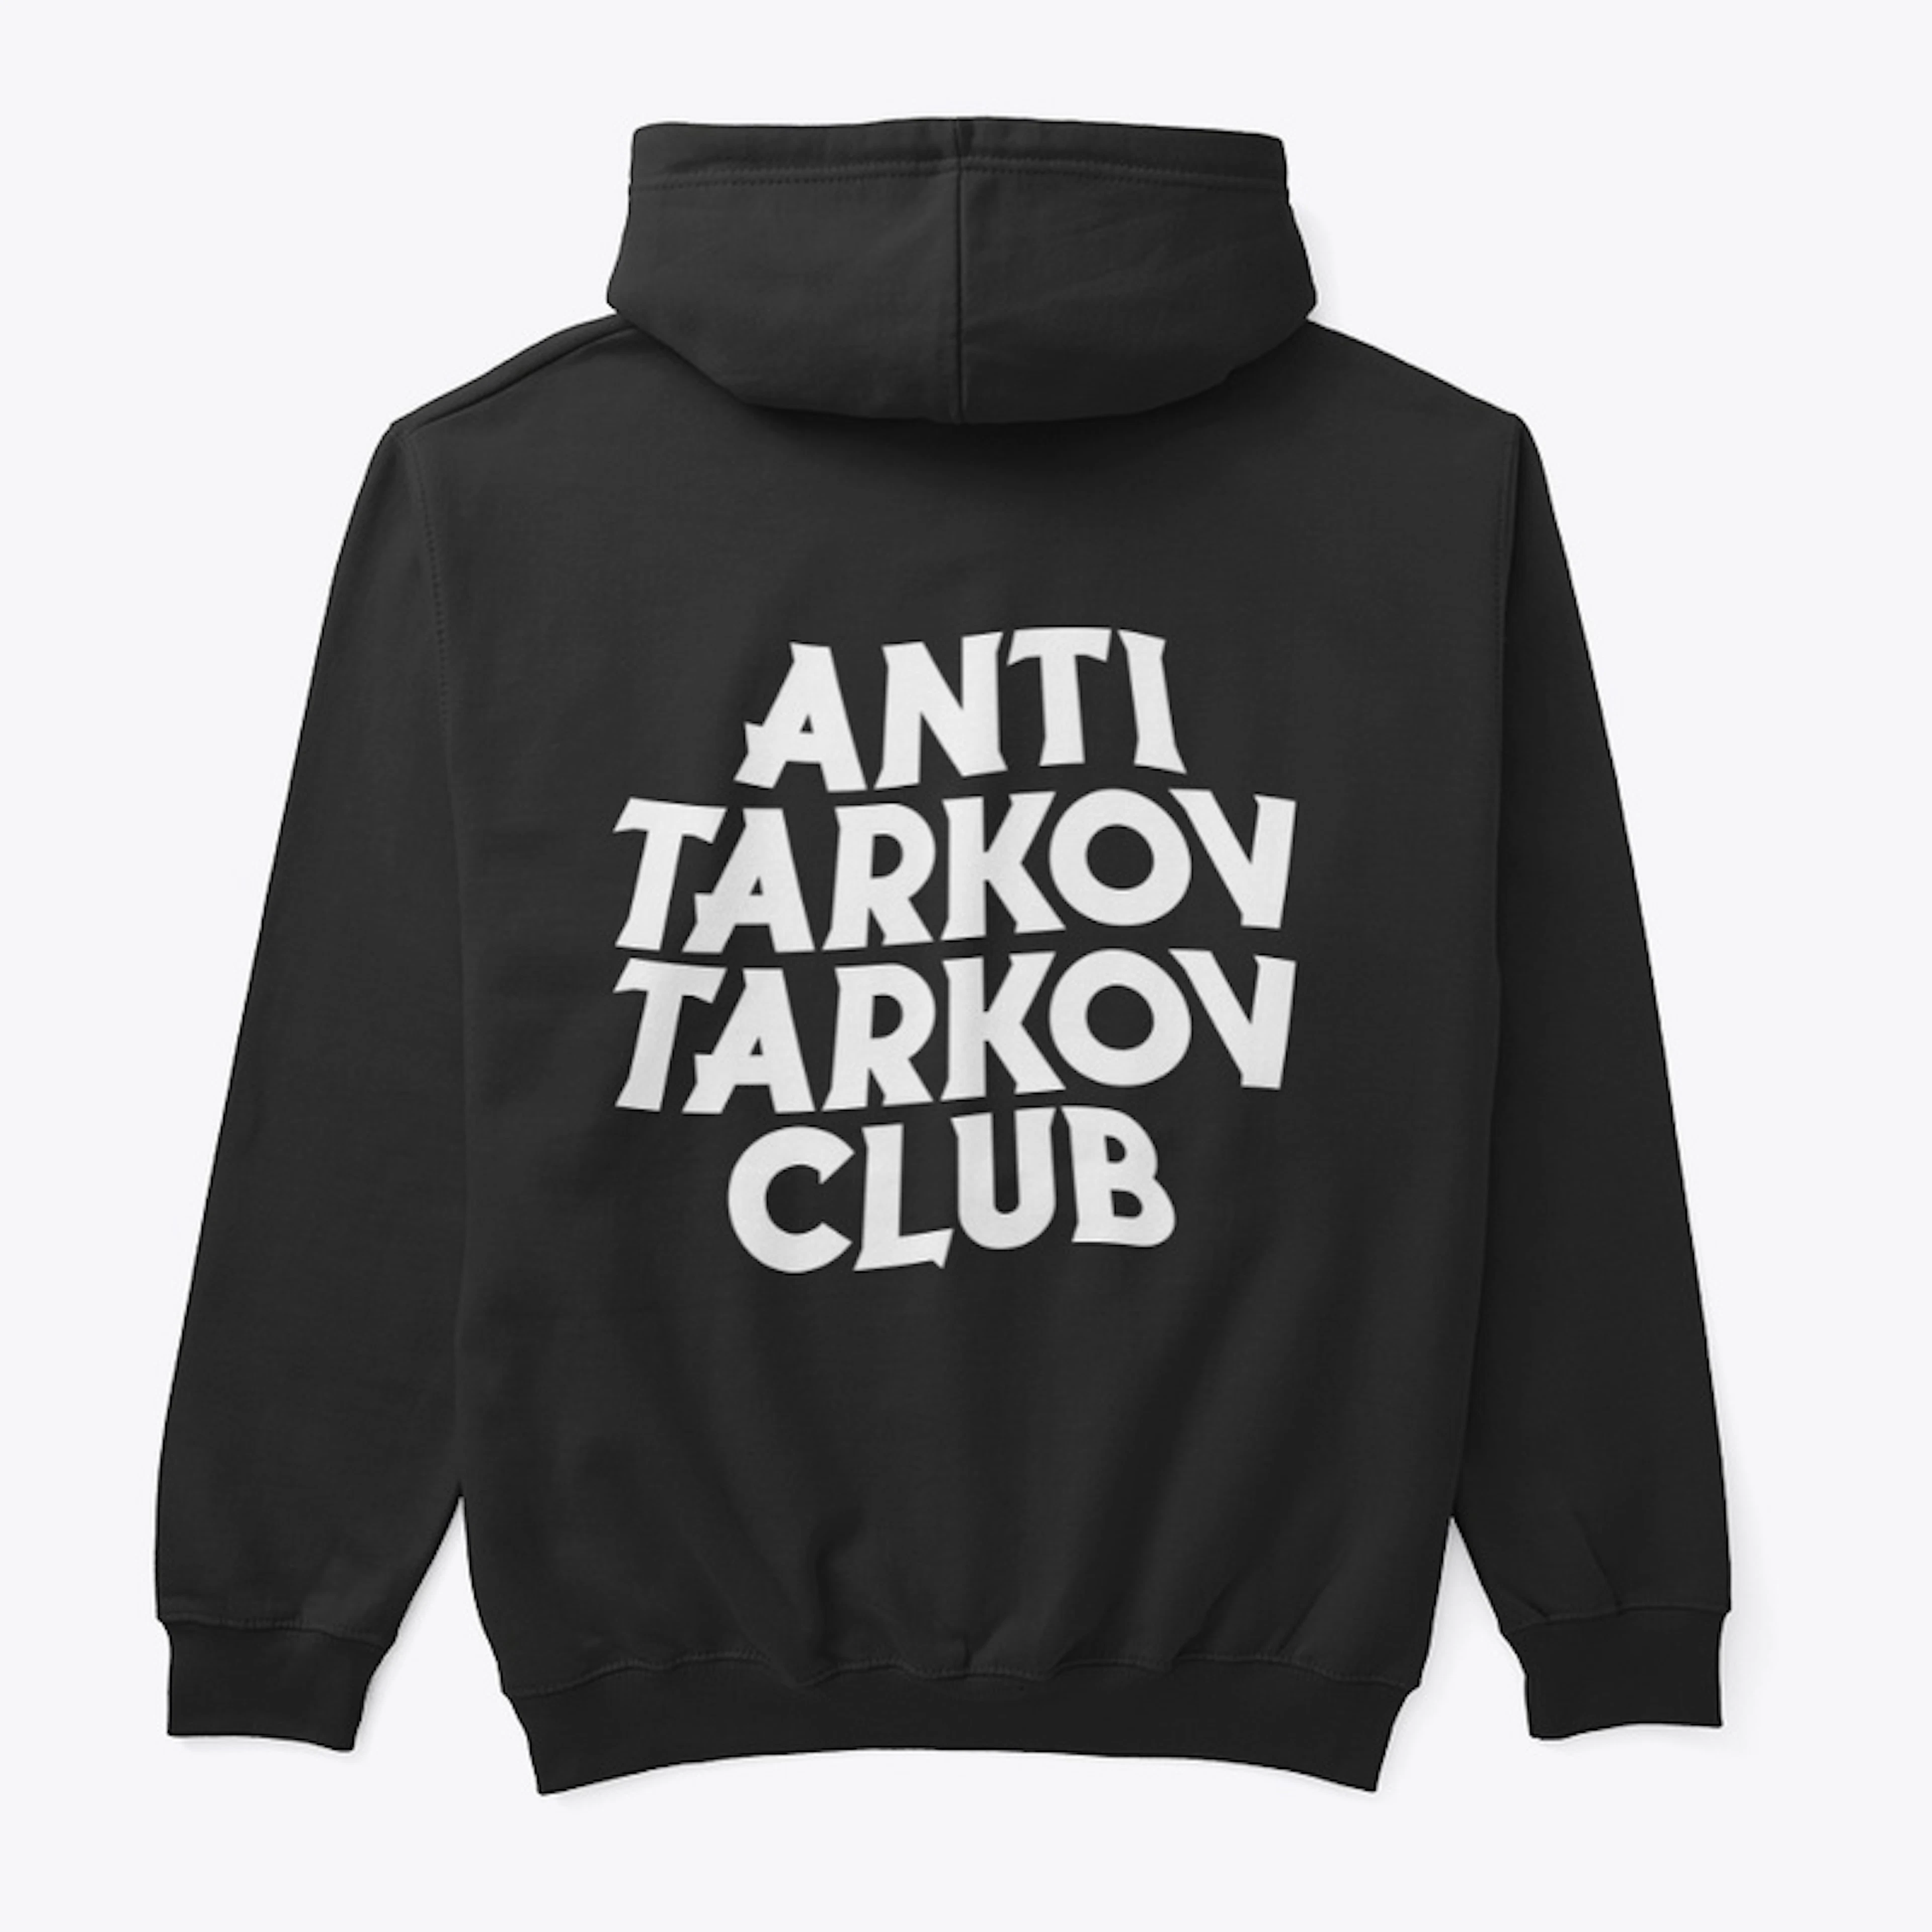 Anti Tarkov Tarkov Club Hoodie